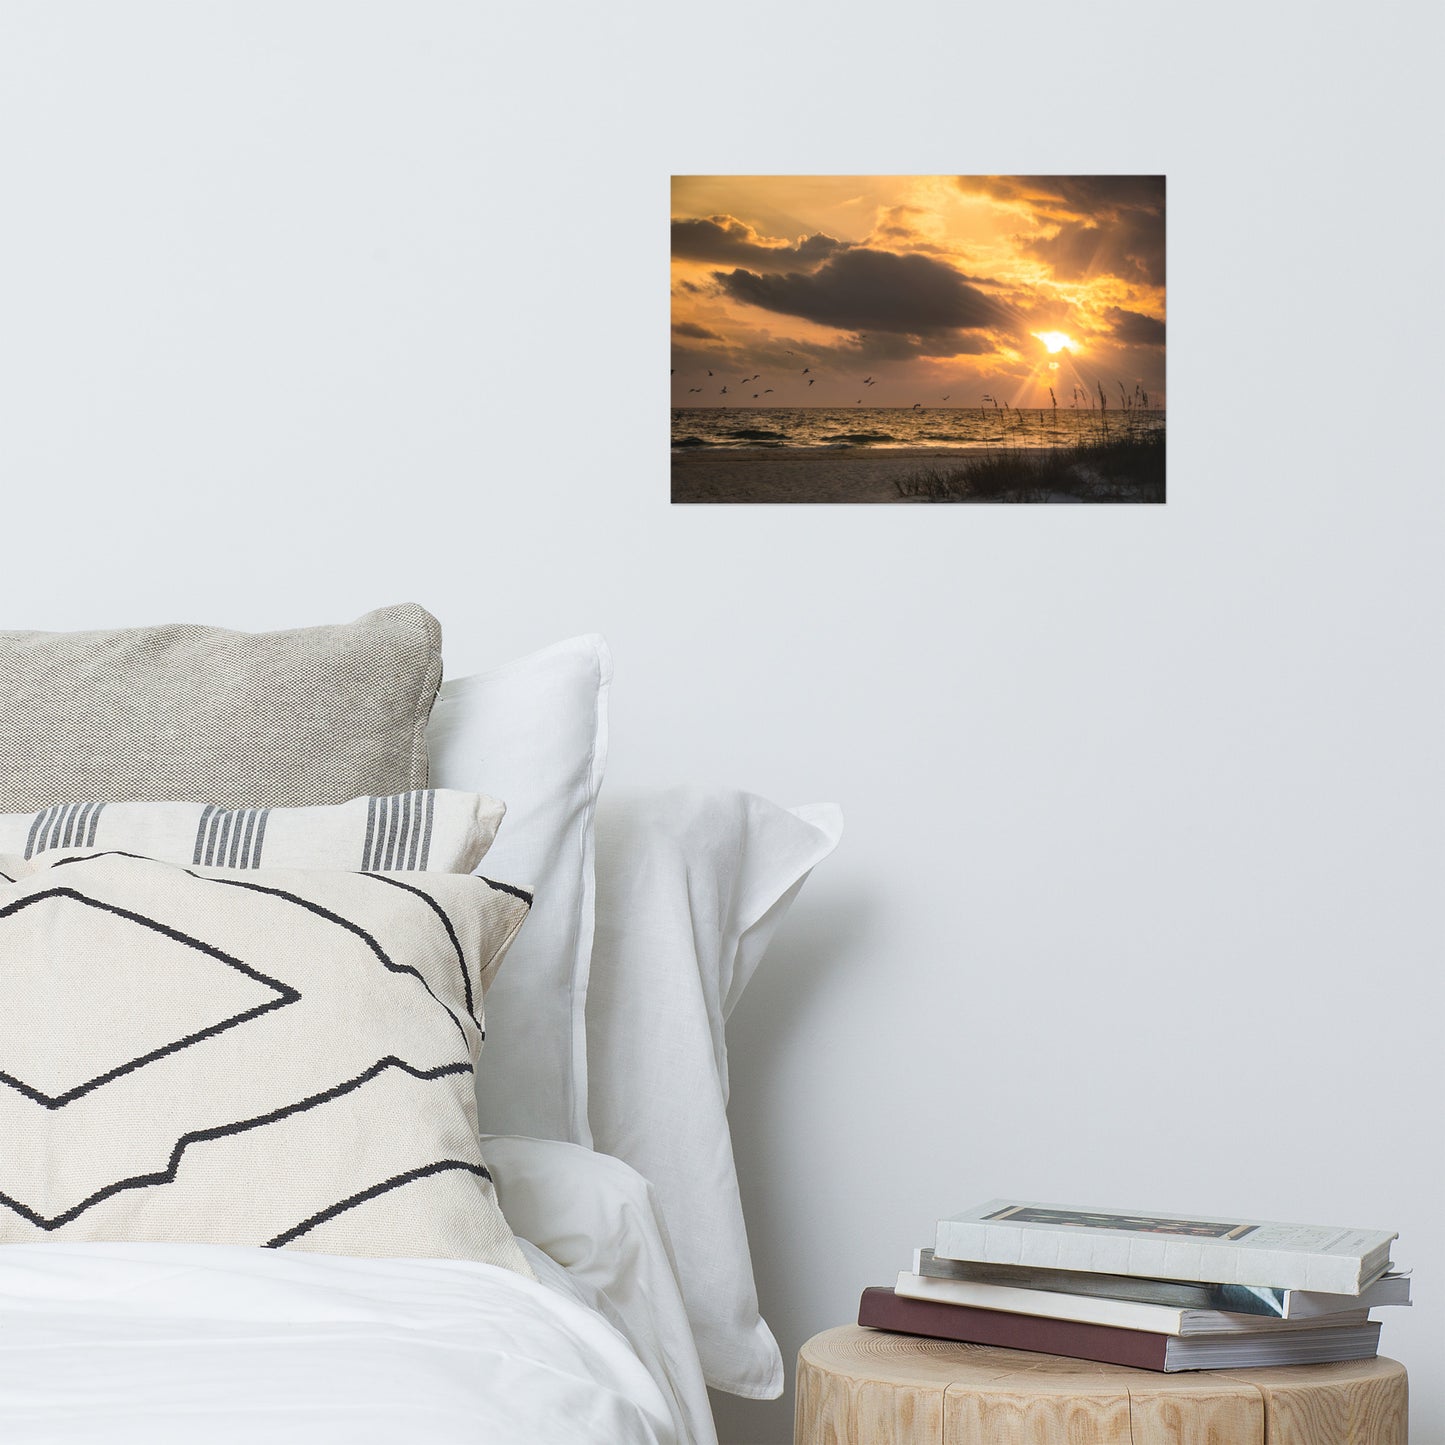 Artwork To Hang Over Bed: Anna Maria Island Cloudy Golden Sunset 1 - Beach / Coastal / Seascape Nature / Landscape Photograph Loose / Unframed / Frameless / Frameable Wall Art Print - Artwork